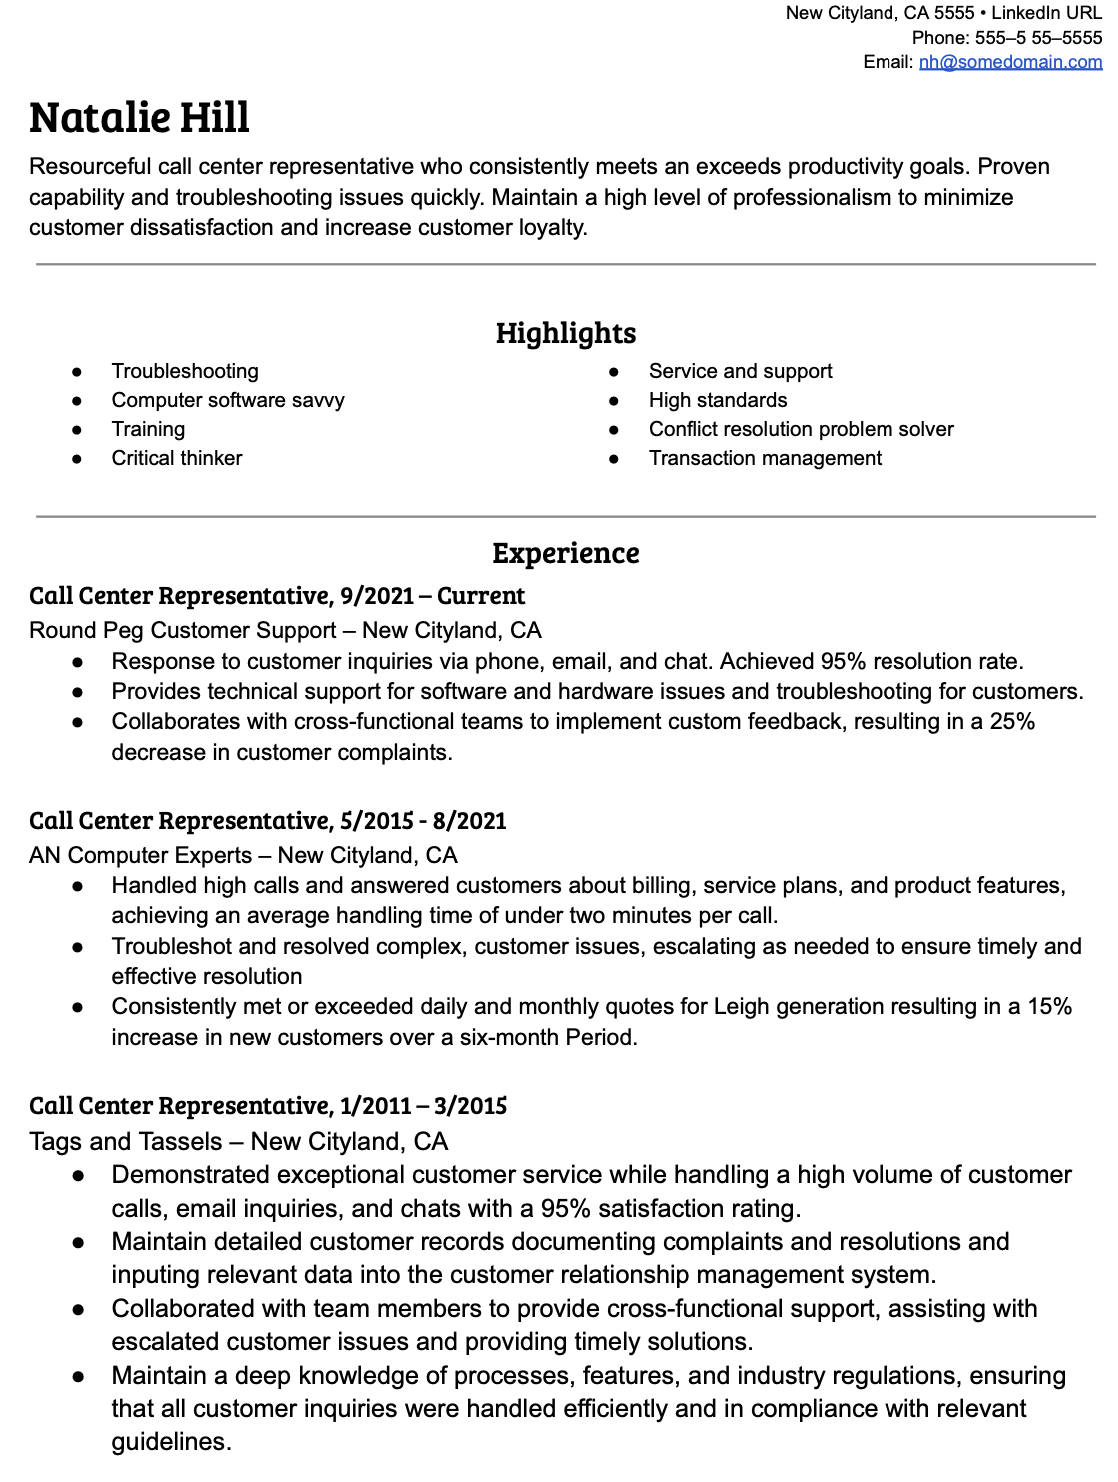 call center resume examples, call center rep resume template